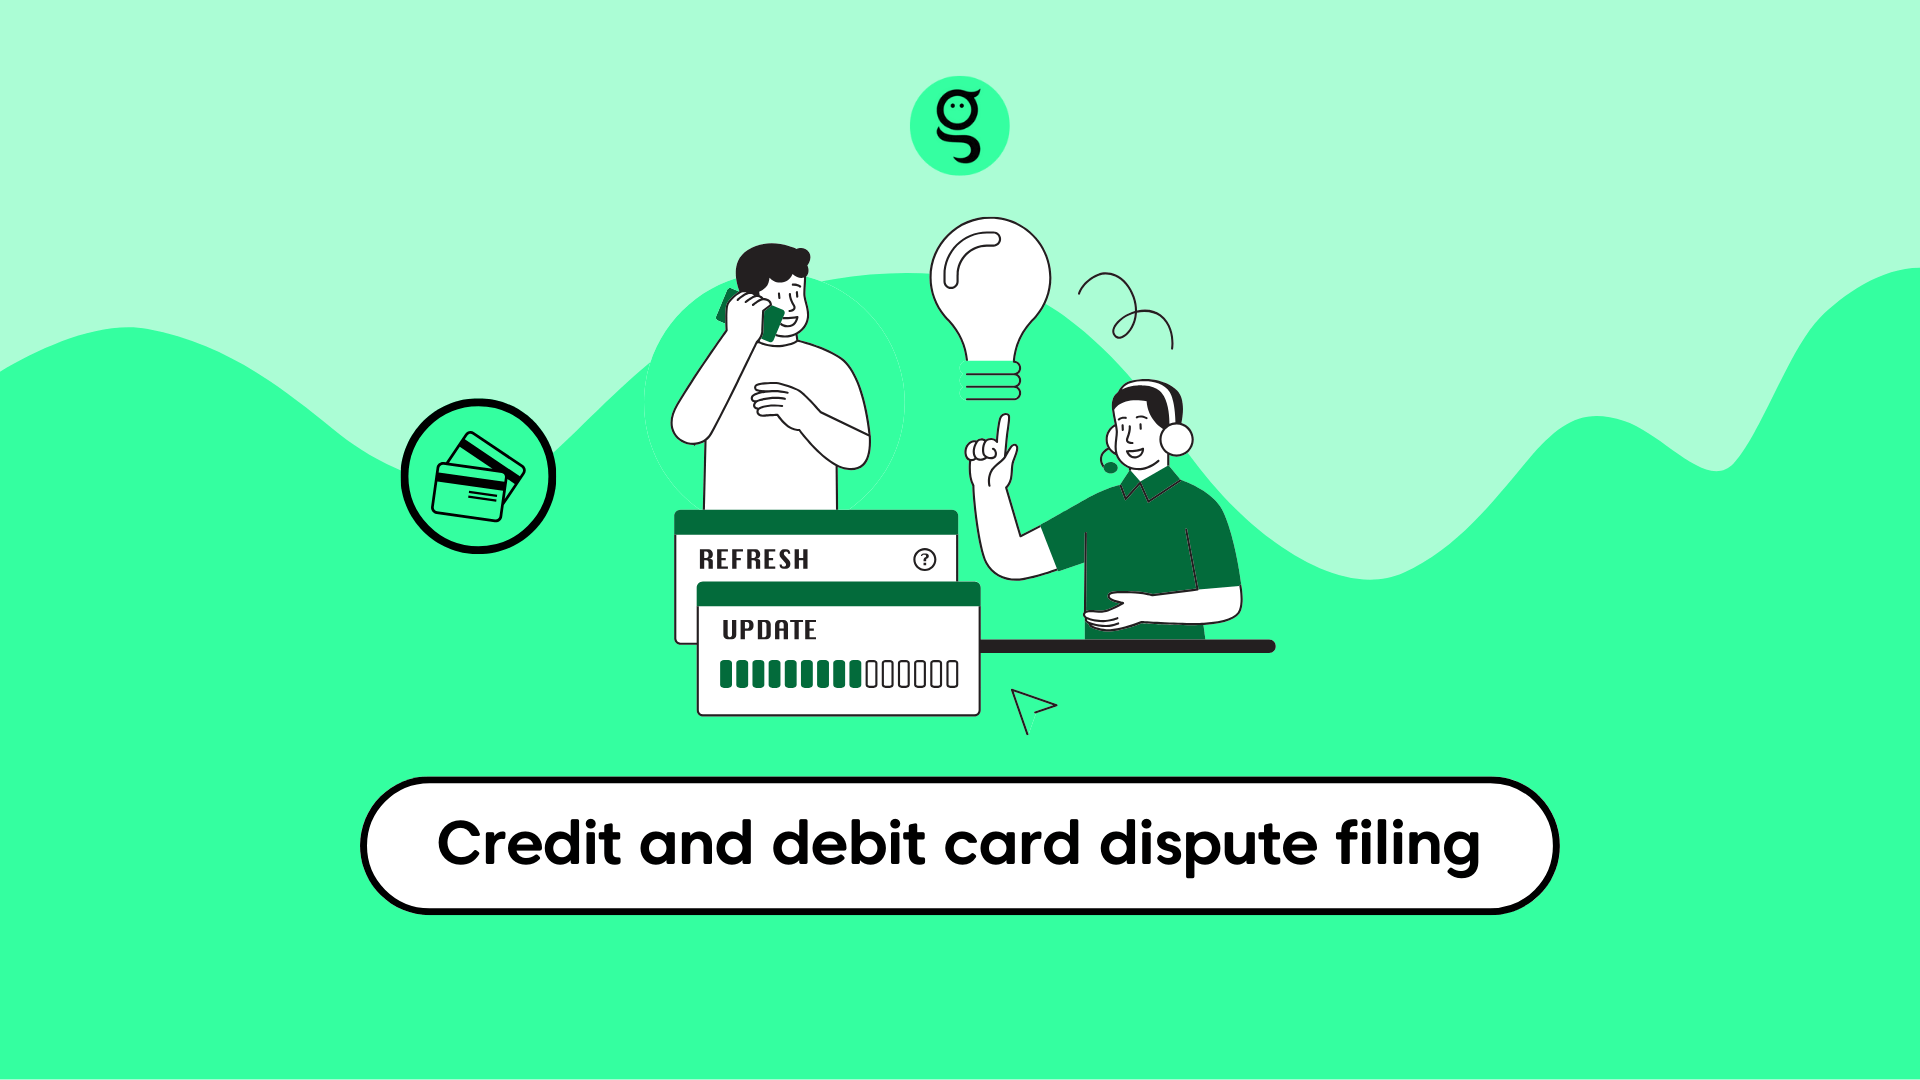 Use Case - Credit & Debit Card Dispute Filing